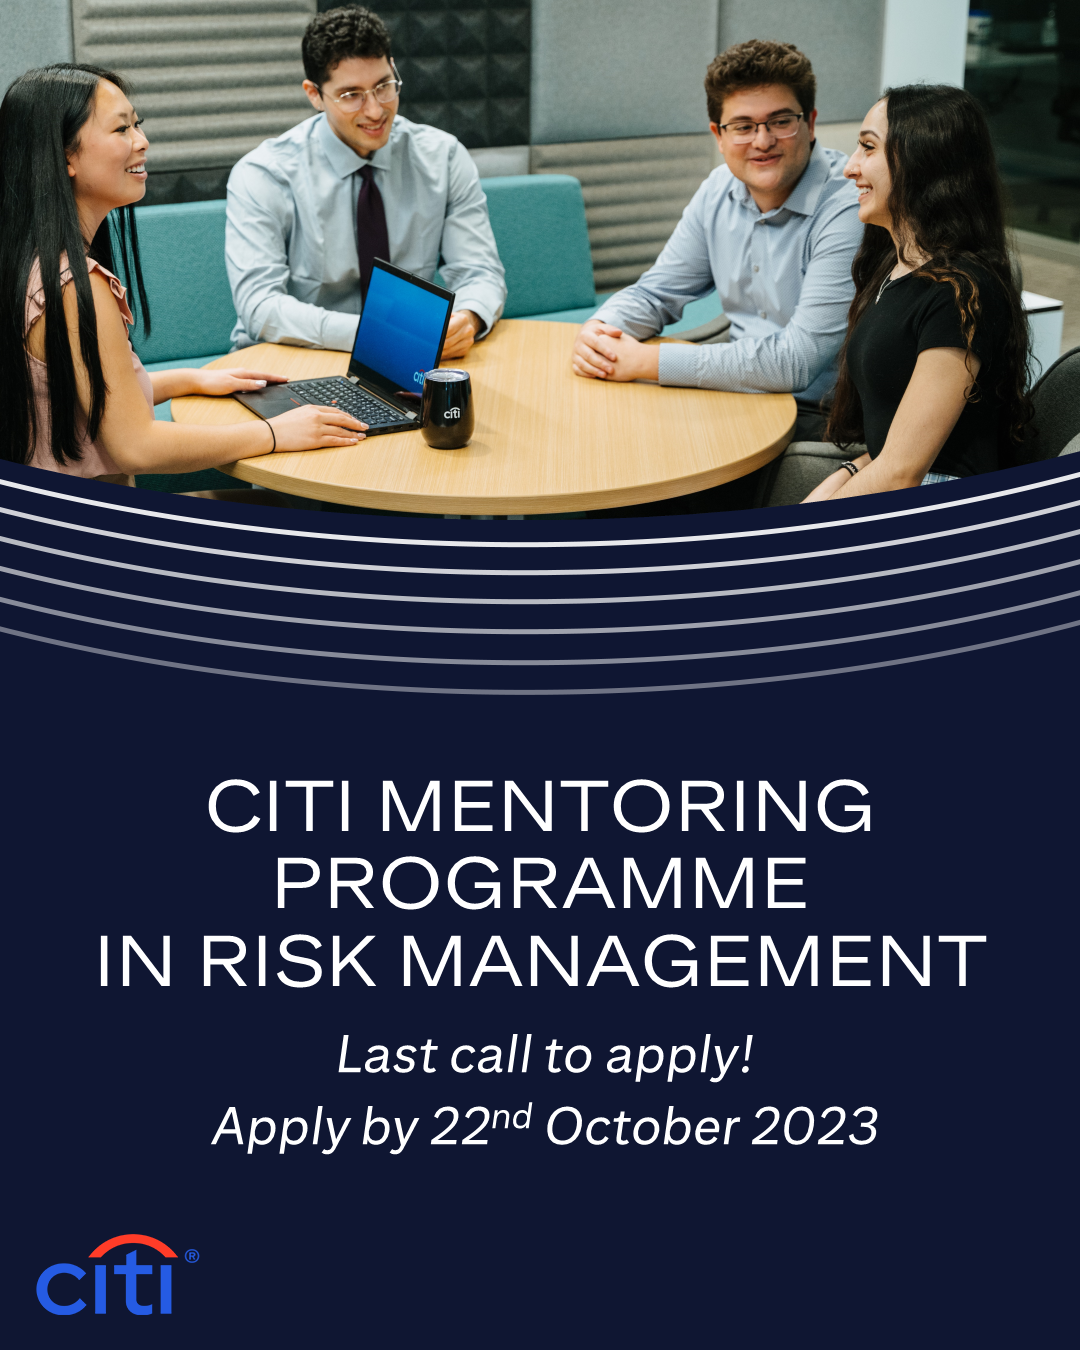 Citi Mentoring Programme in Risk Management